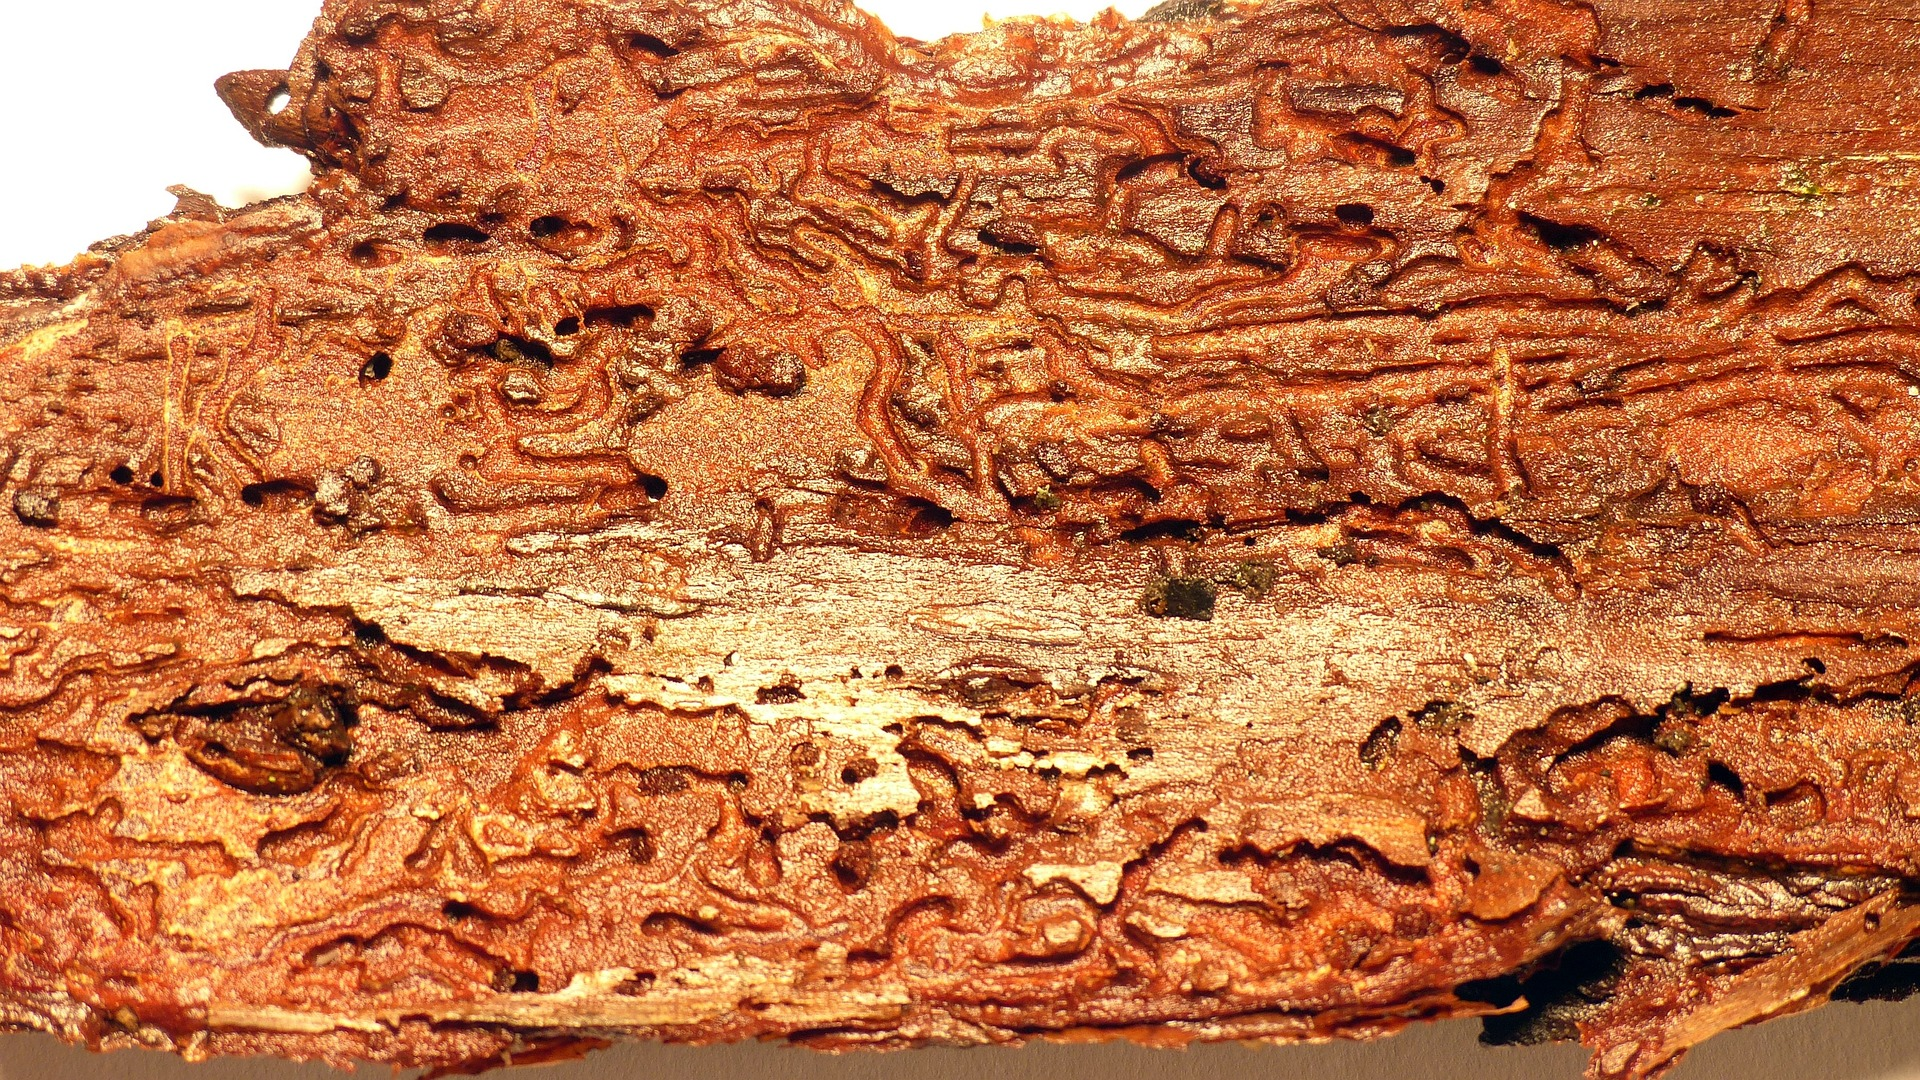 Identifying woodworm infestation